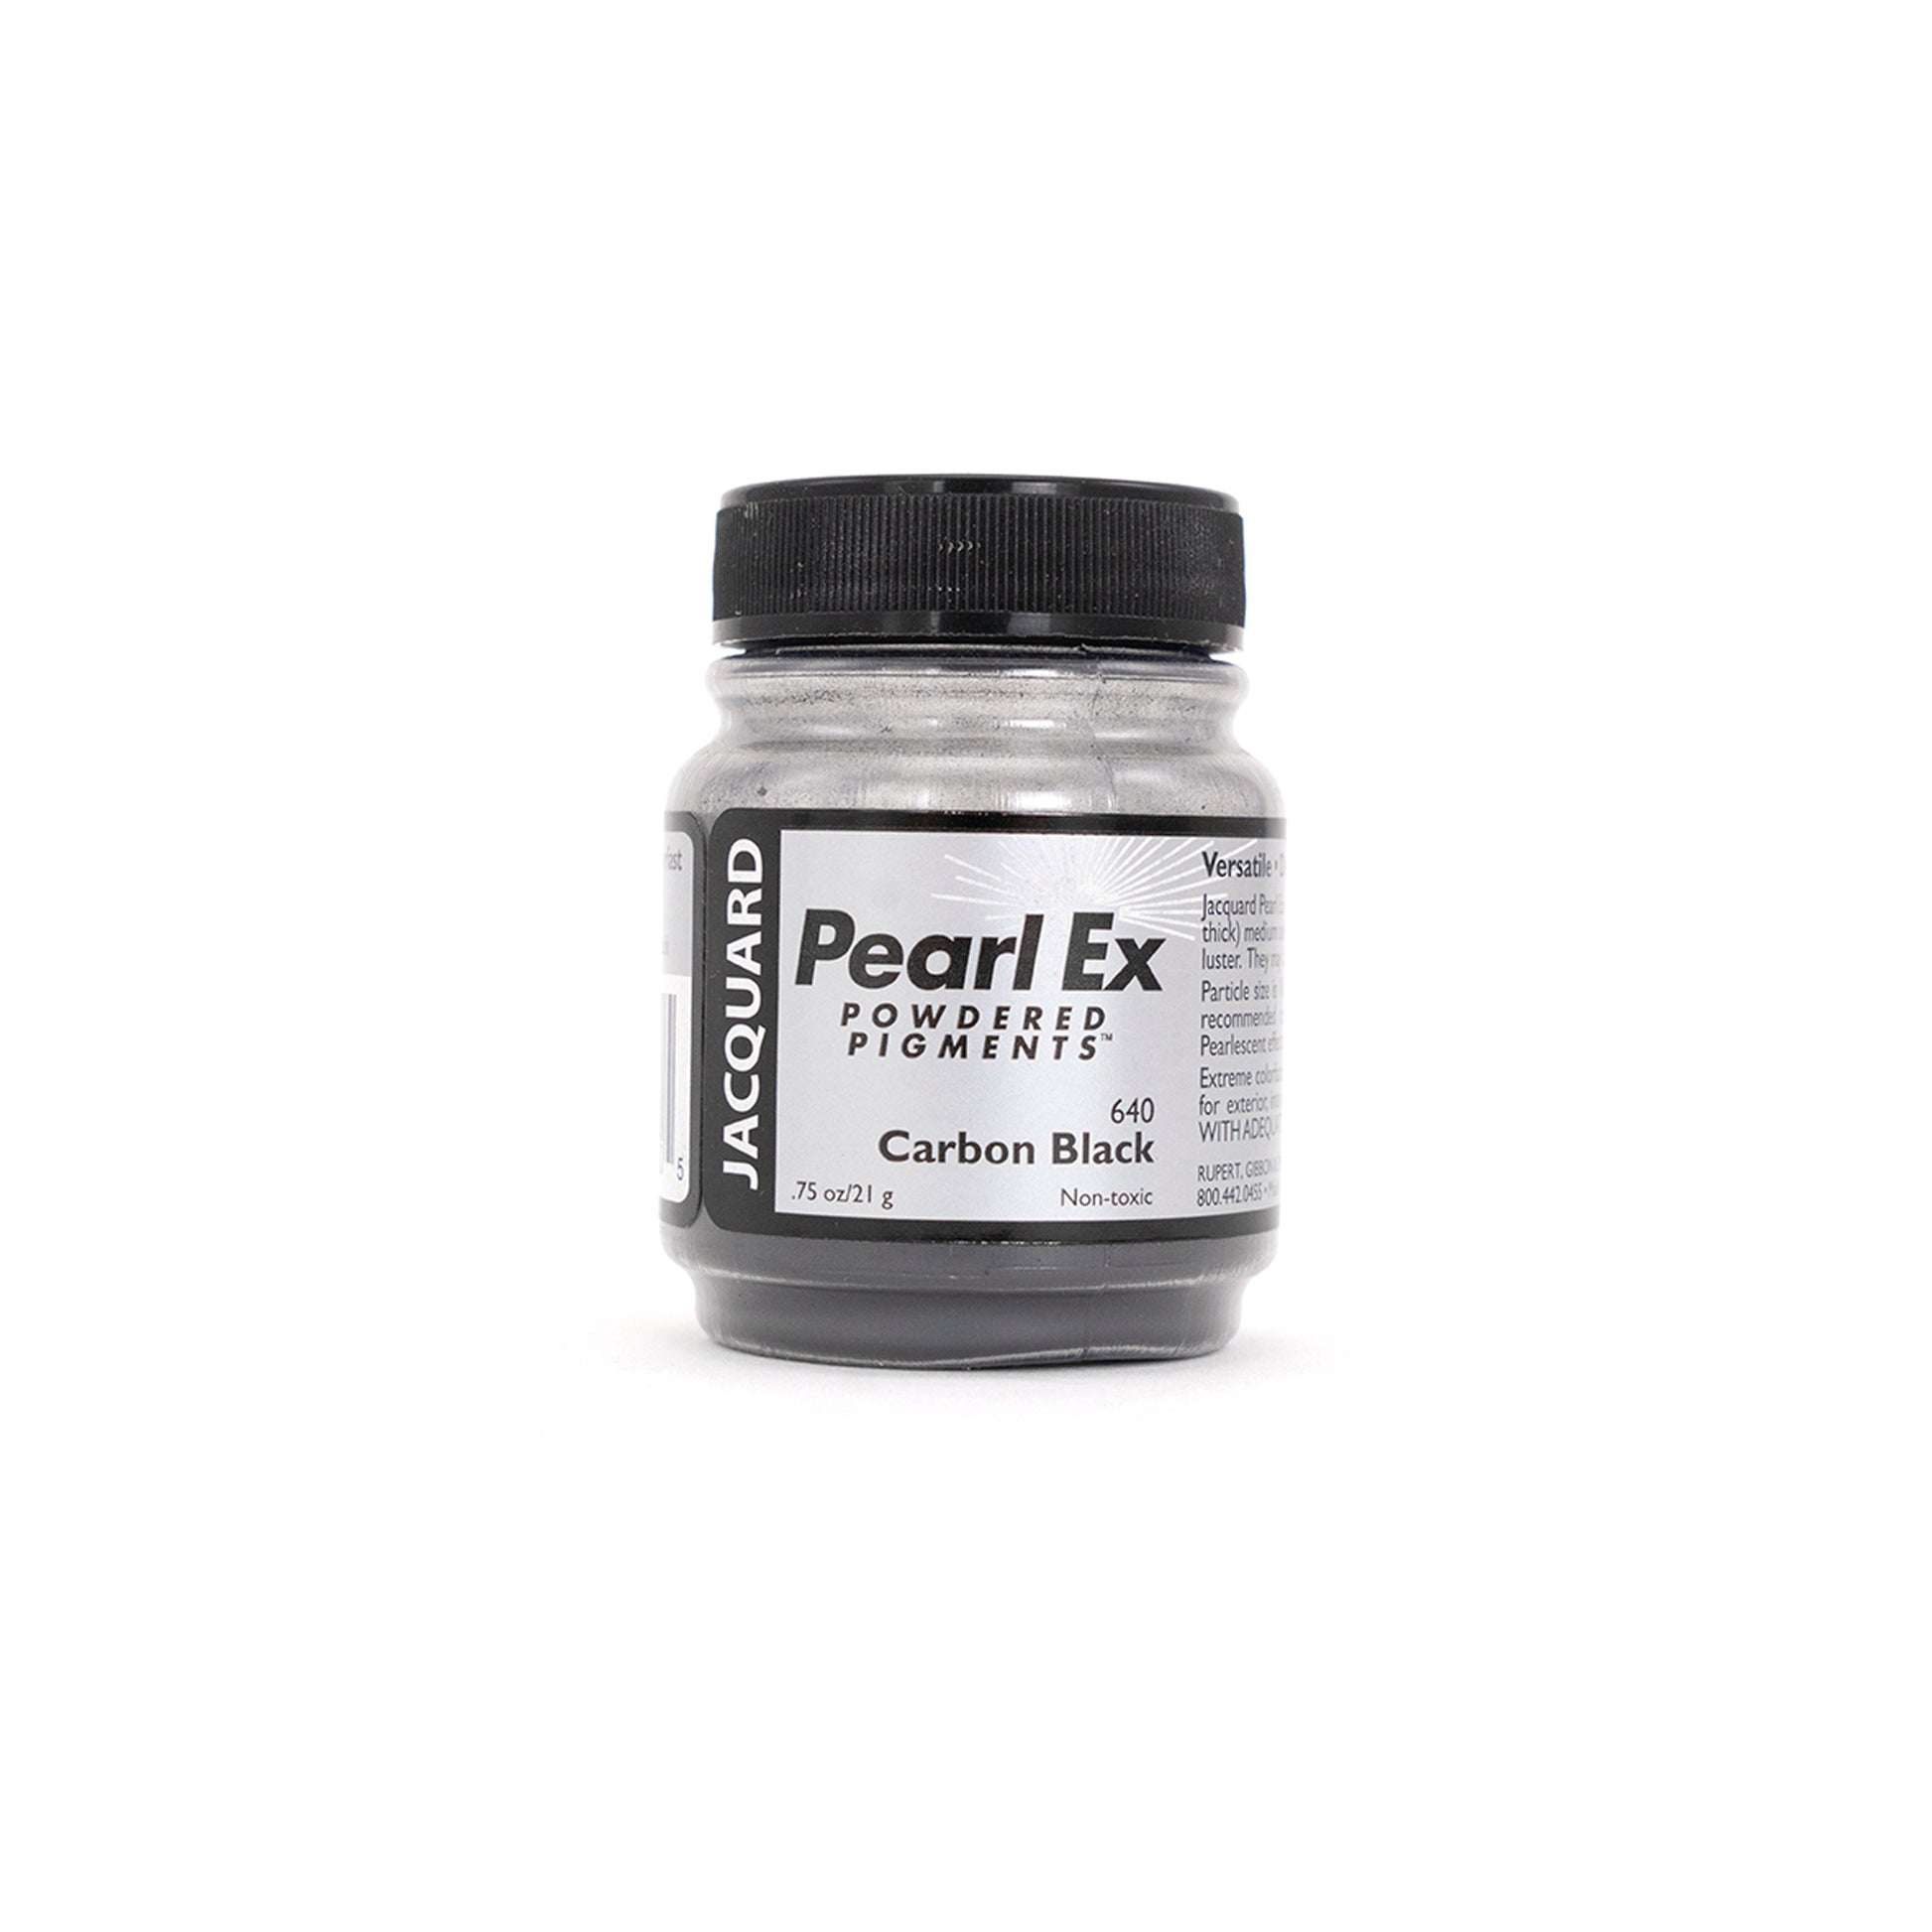 Jacquard PearlEx Powdered Pigments - 0.75 oz jars - Carbon Black by Jacquard - K. A. Artist Shop